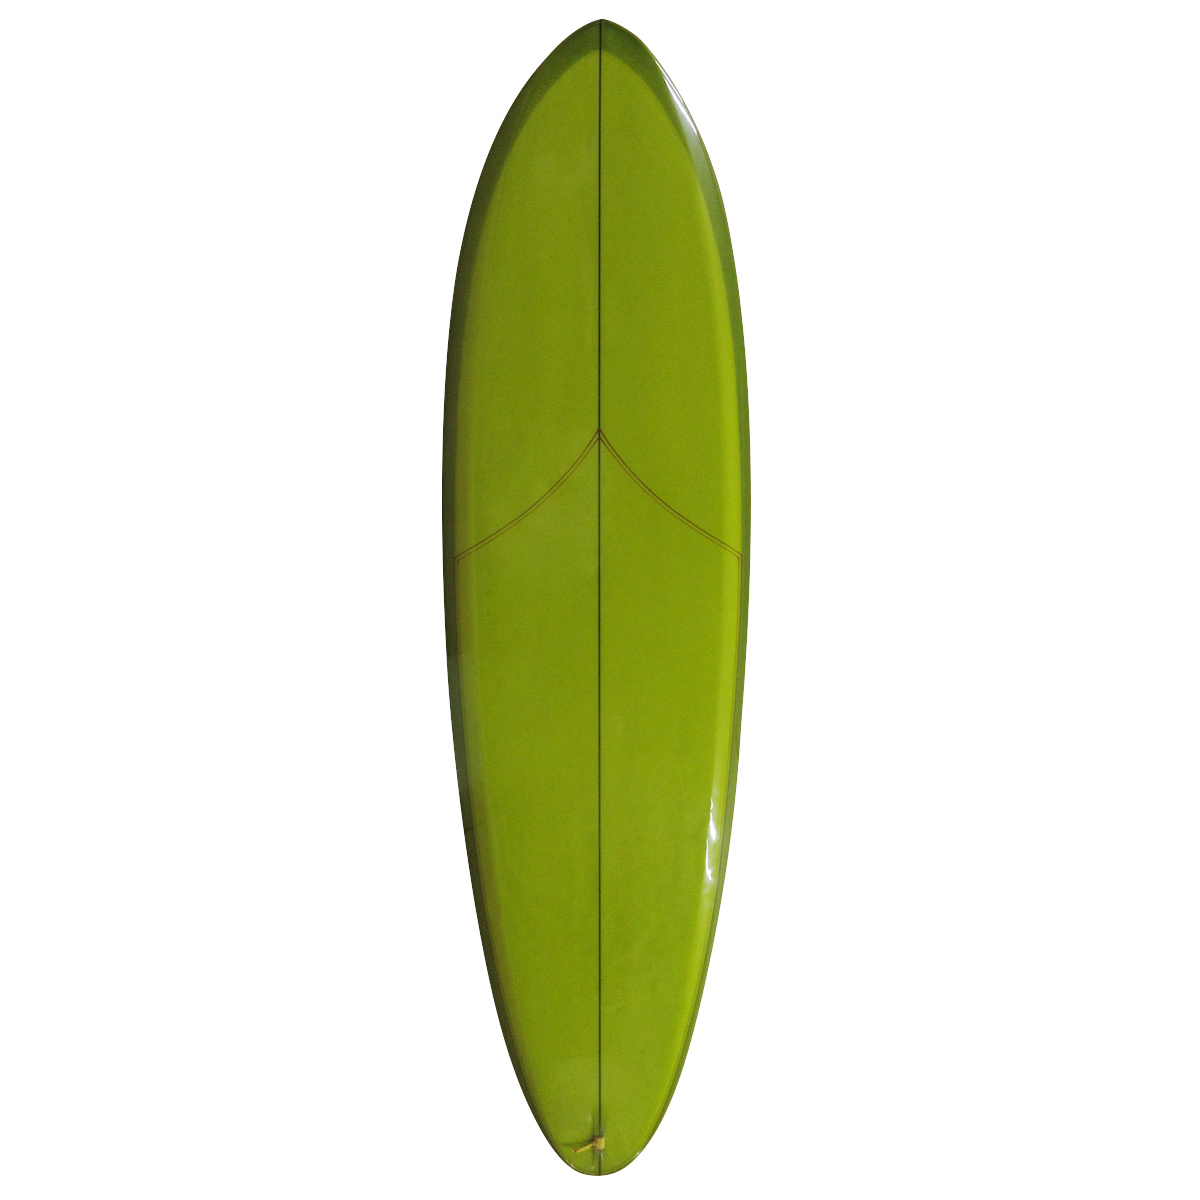 Mccallum Surfboards  / Upside Down Egg 6'6 Shaped By Jeff Mccallum